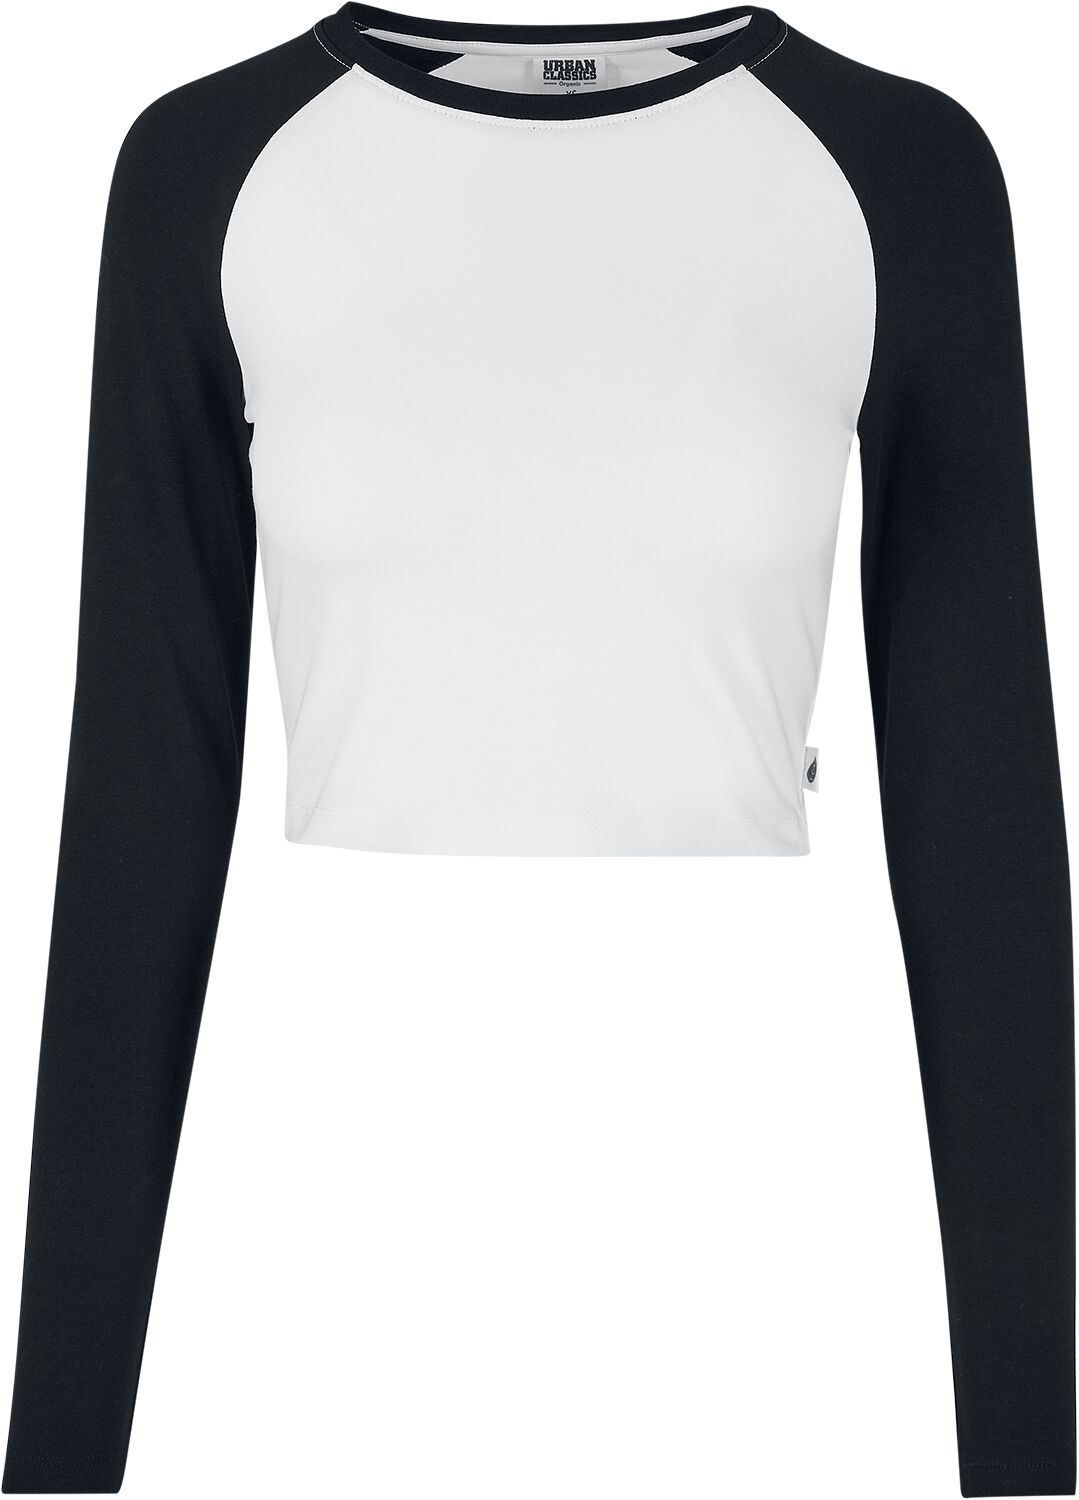 Urban Classics Ladies Organic Cropped Retro Baseball Longsleeve Langarmshirt weiß schwarz in XXL von Urban Classics